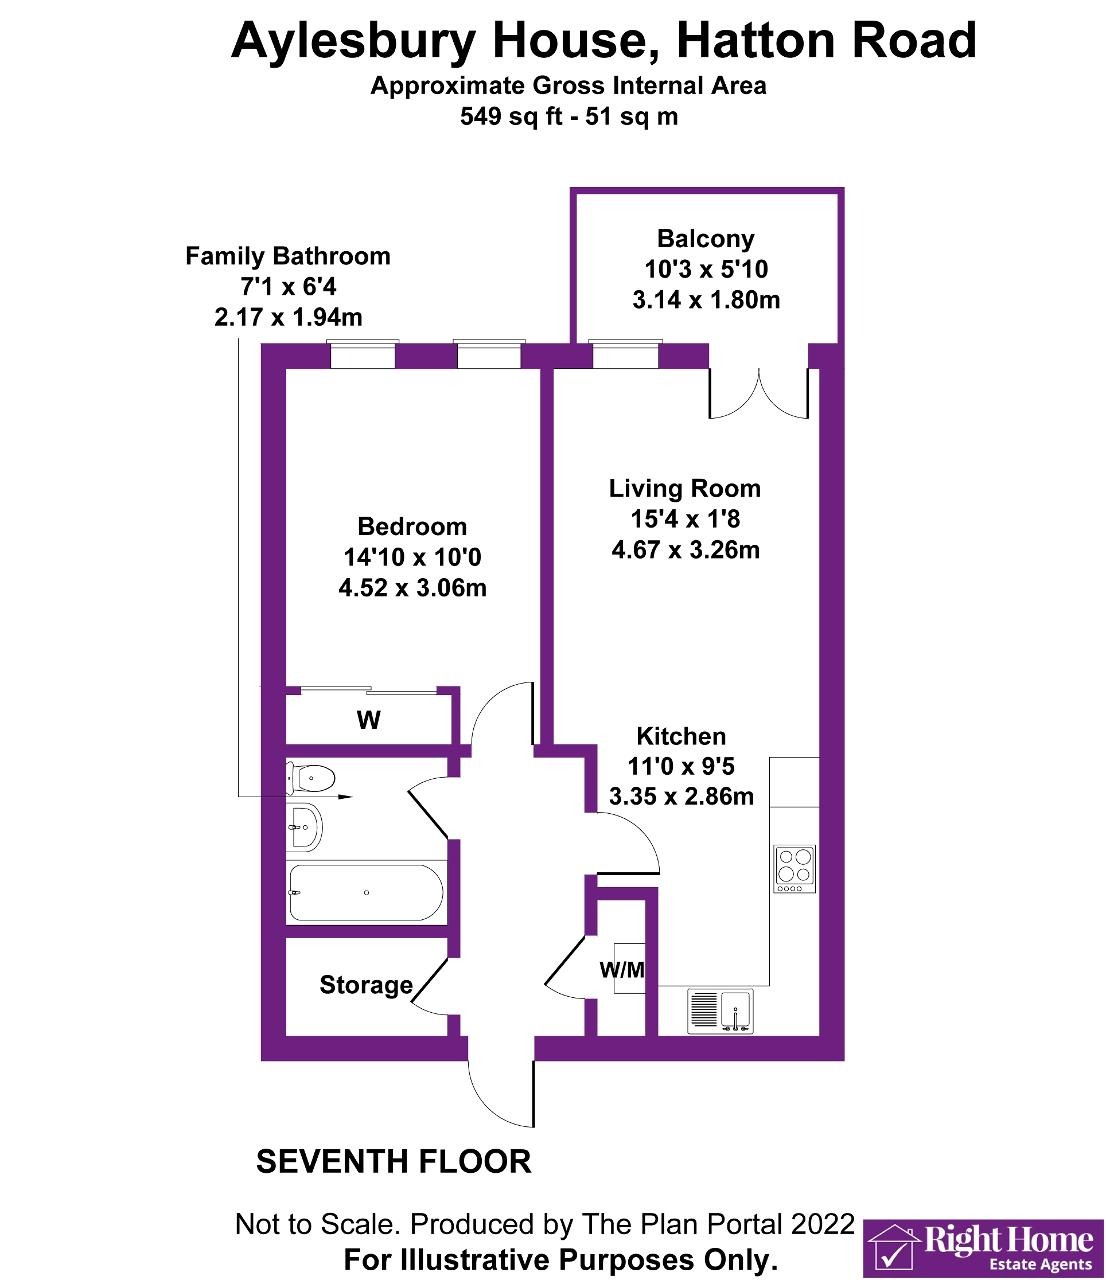 Floorplan of AYLESBURY HOUSE, HATTON ROAD, WEMBLEY, MIDDLESEX, HA0 1QW